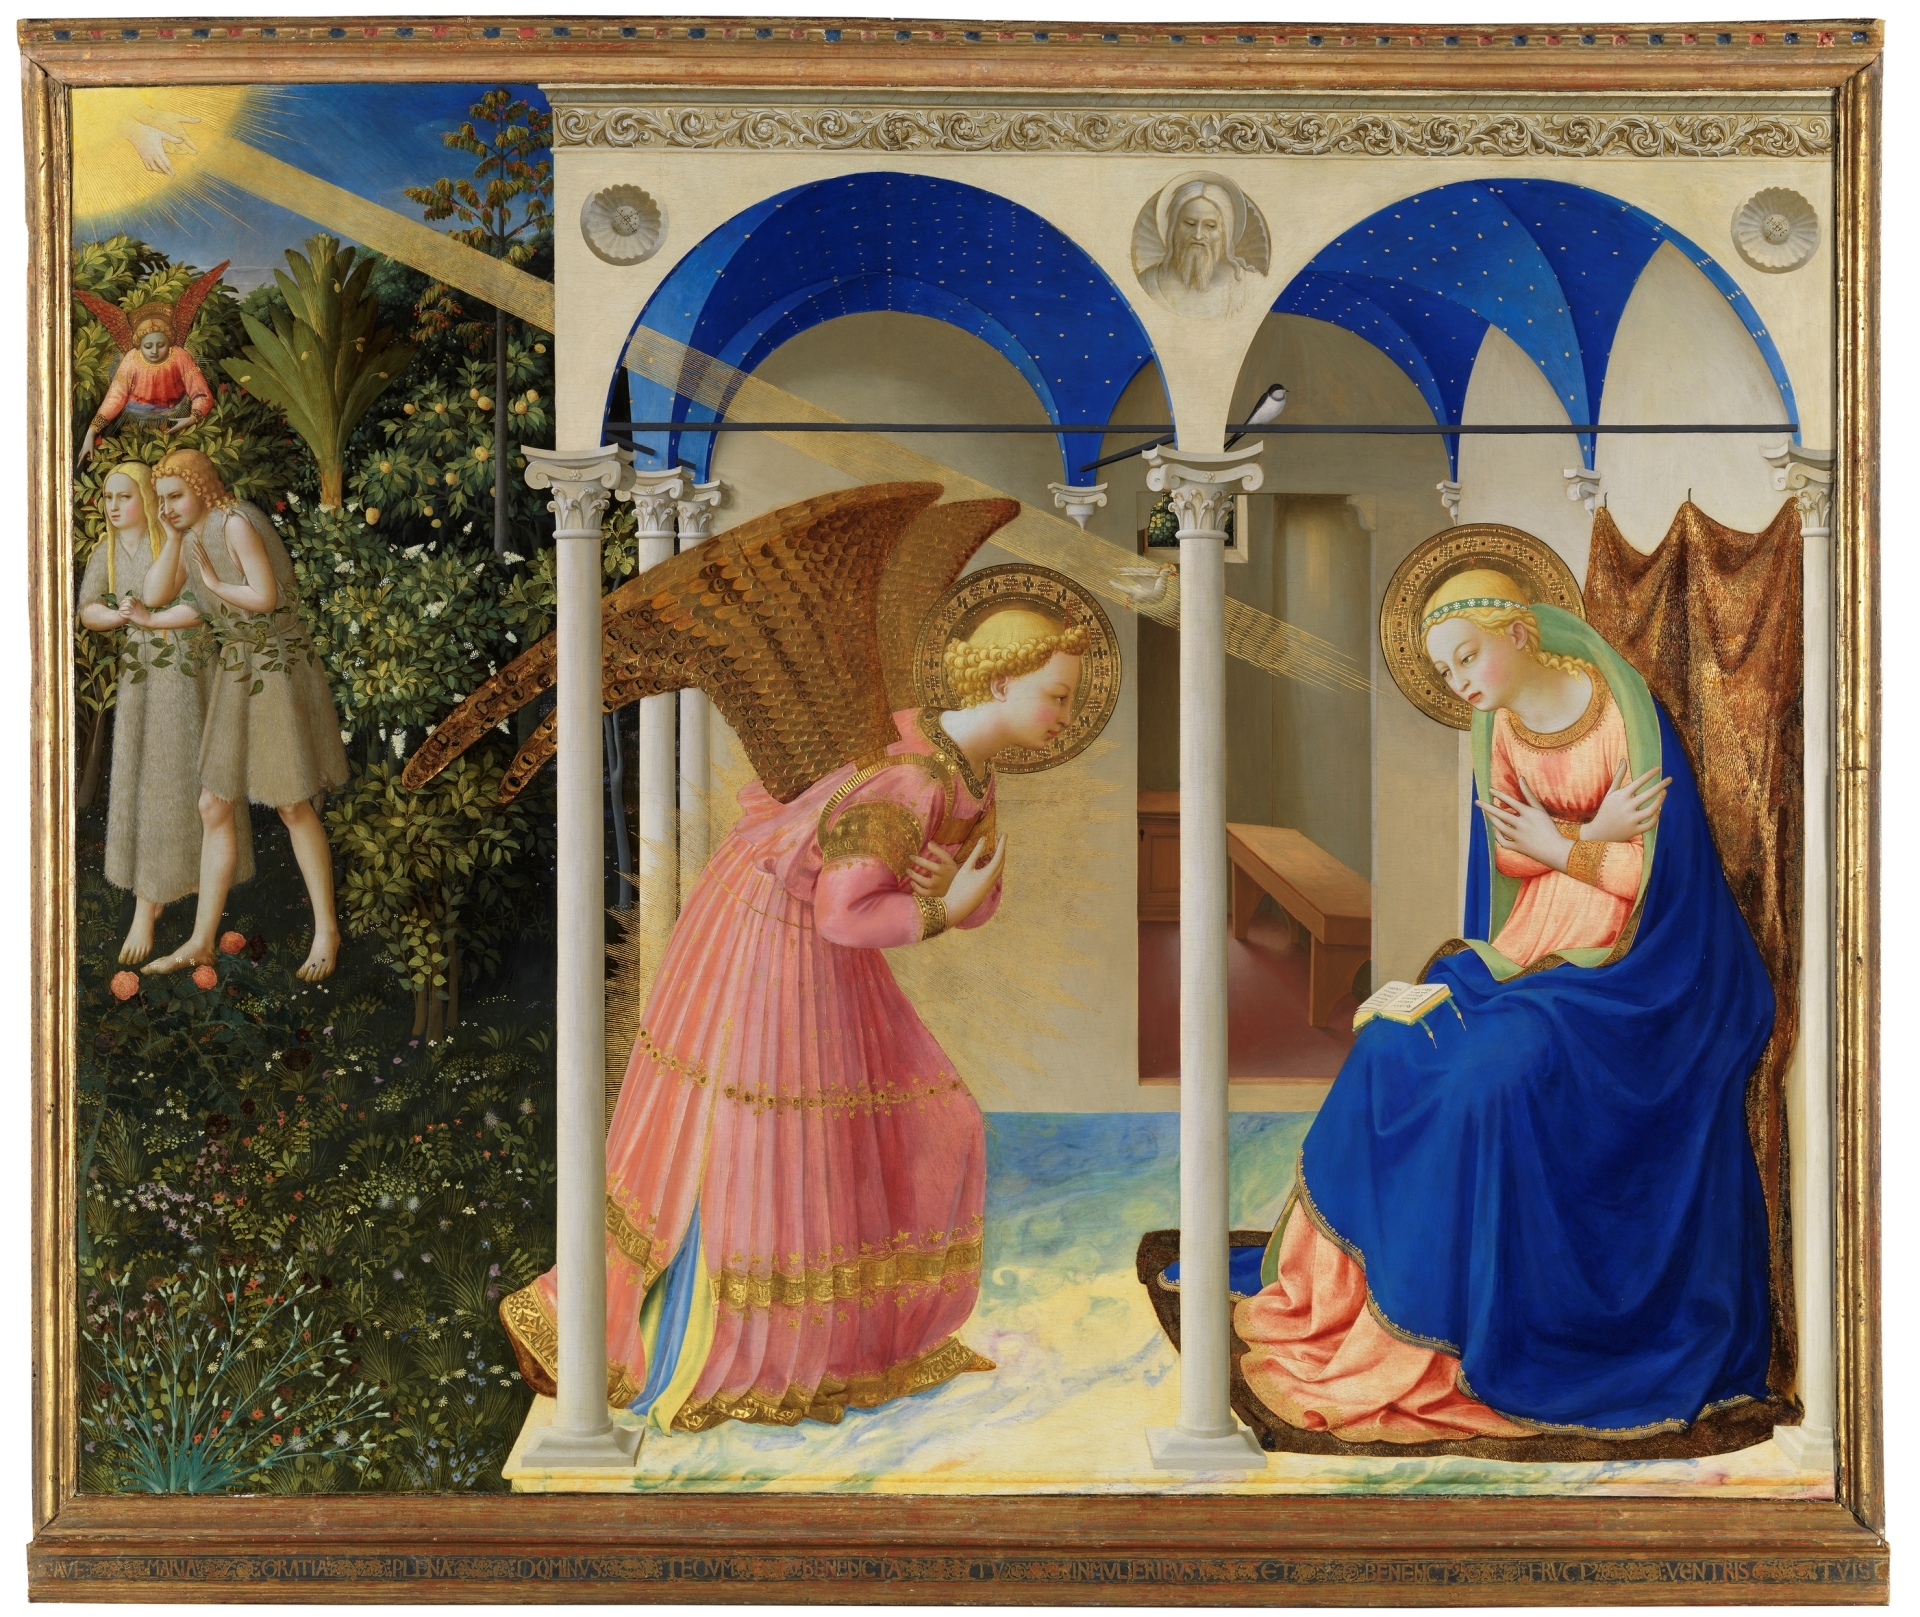 The Annunciation by Fra Angelico - c. 1426 - 162.3 x 191.5 cm Museo del Prado